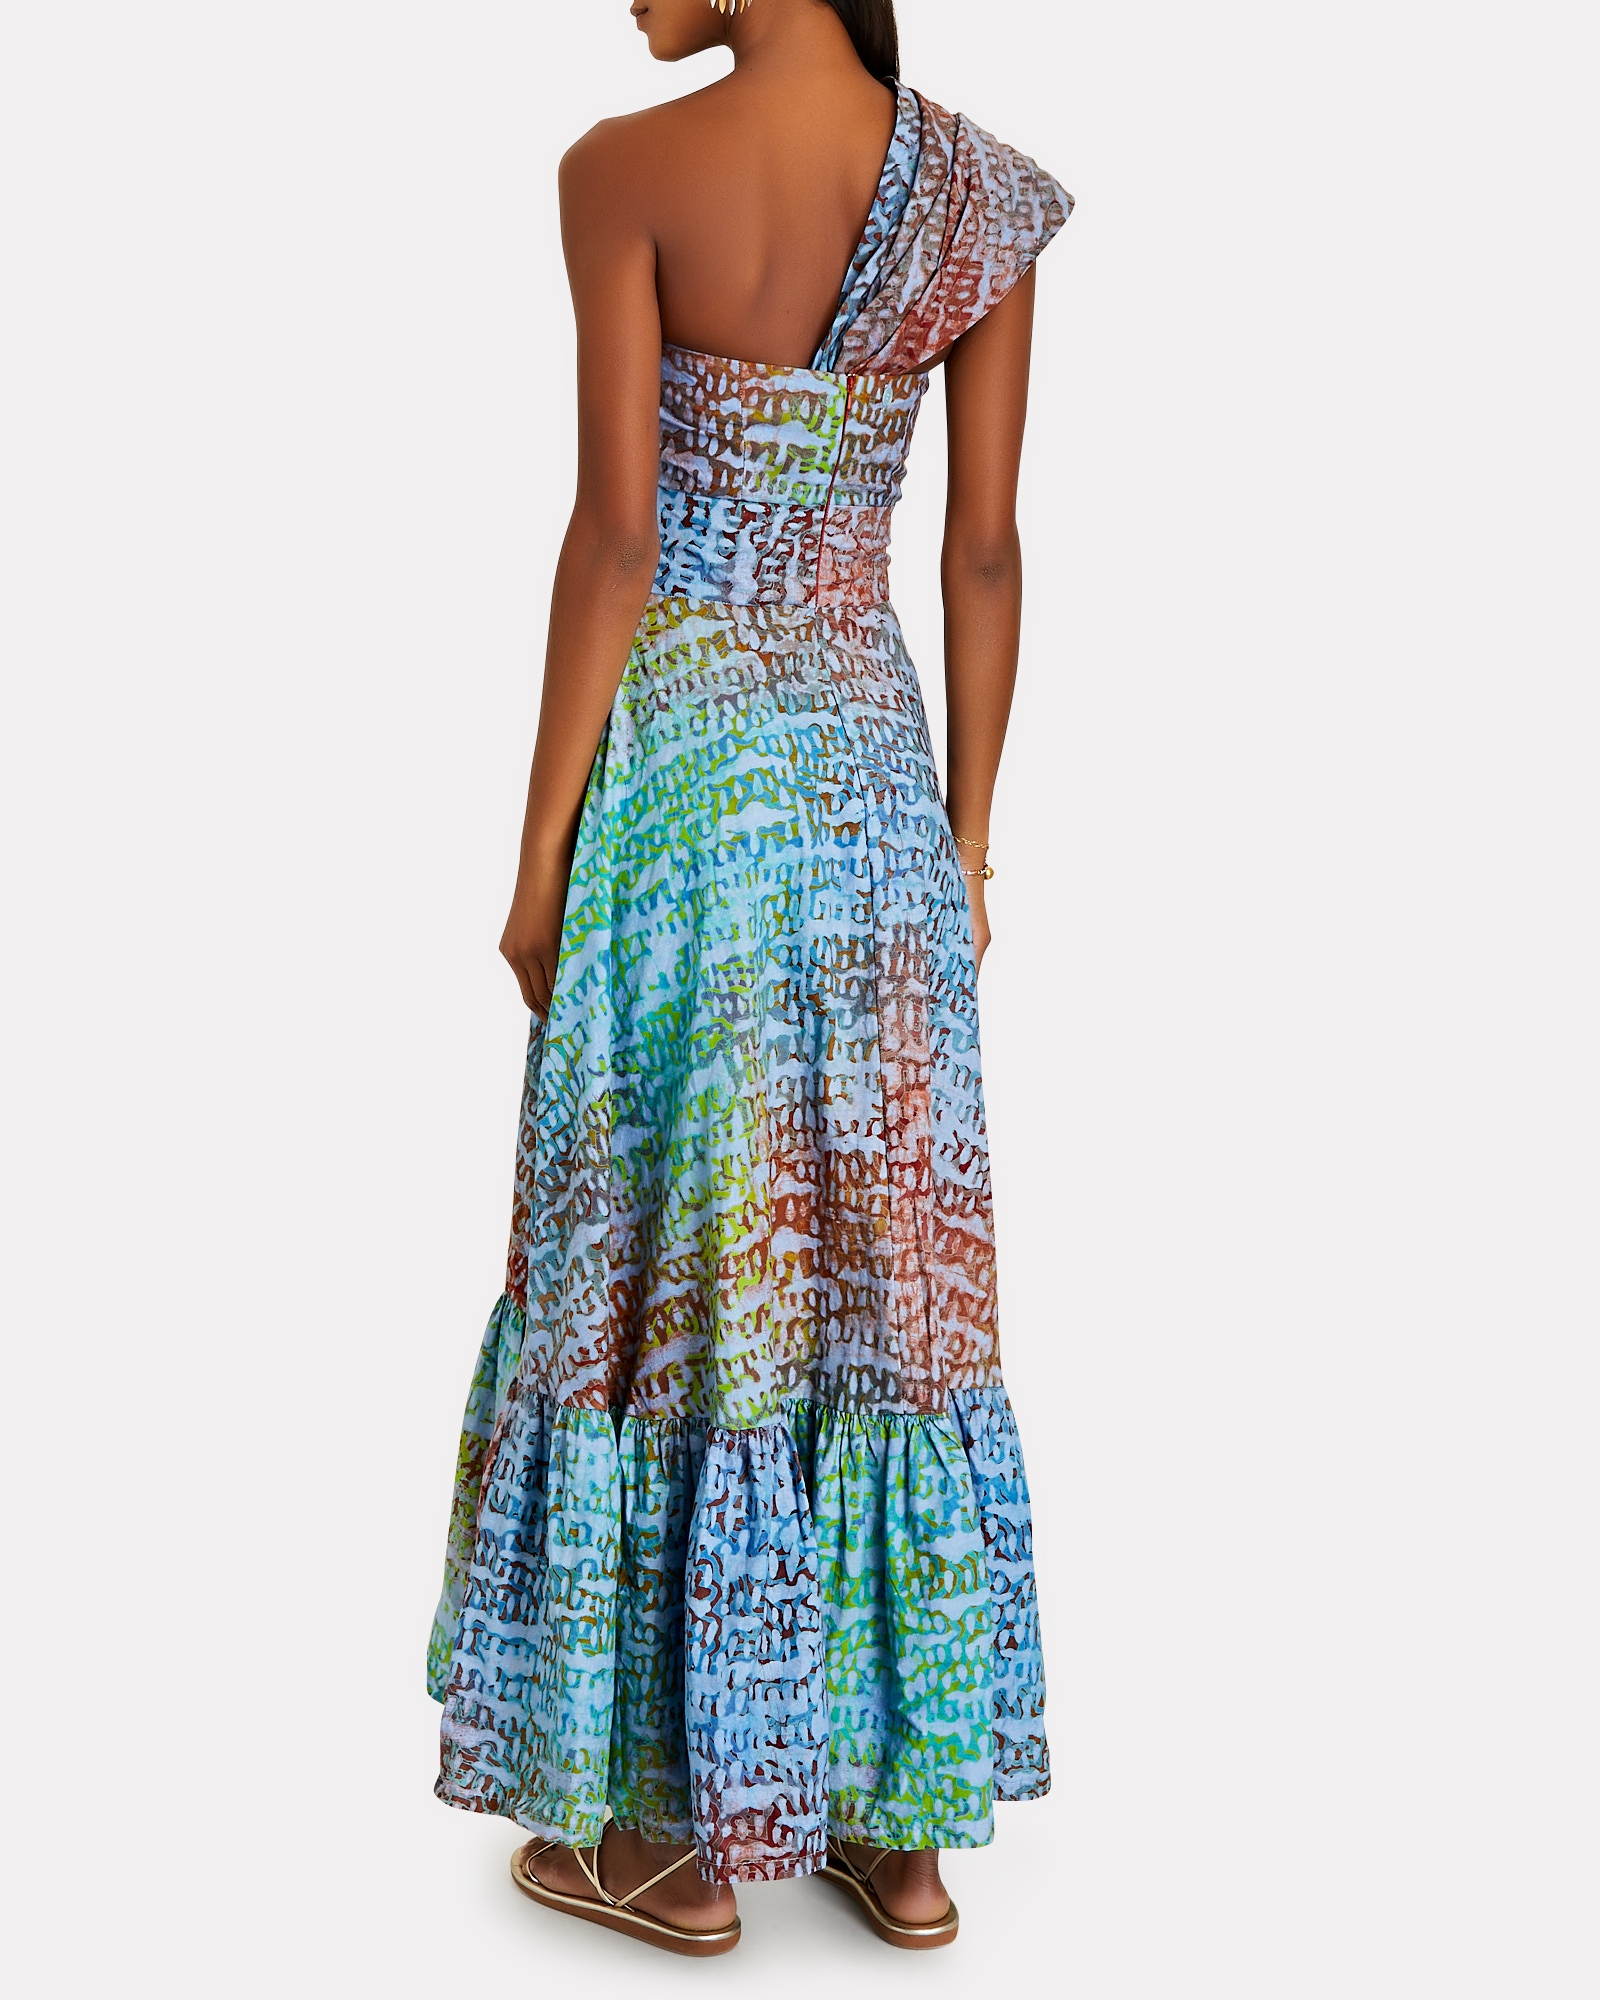 SIKA Beeko Printed Poplin One-Shoulder Dress | INTERMIX®